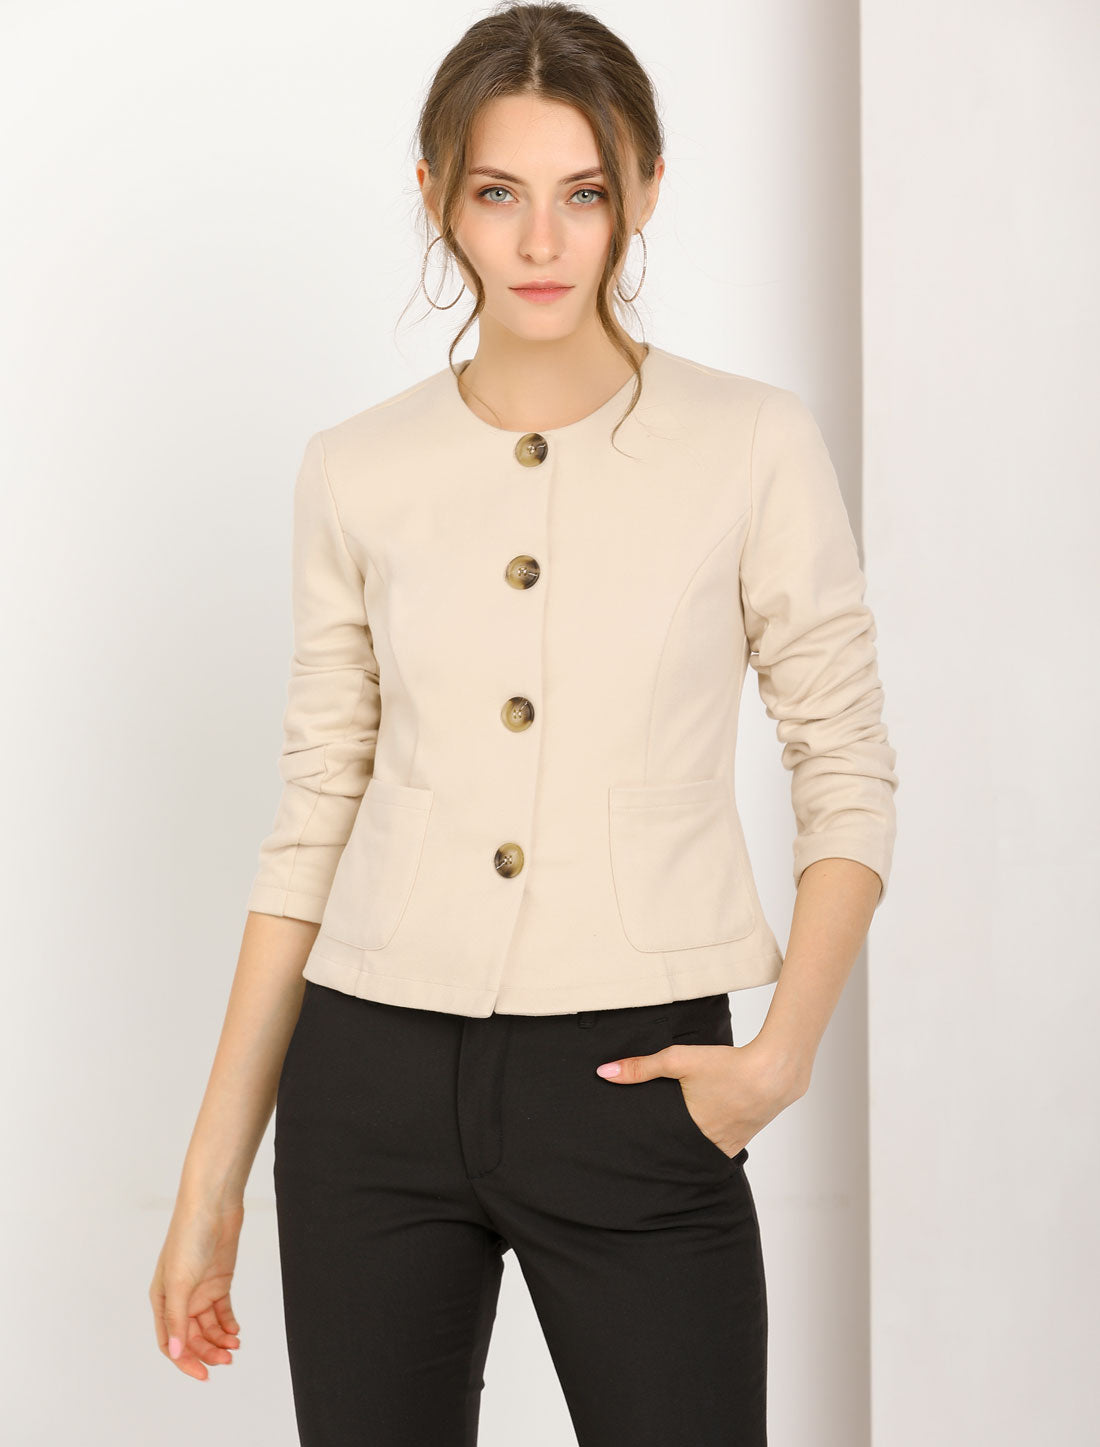 Allegra K Fall Casual Jacket Elegant Button Front Work Office Blazer